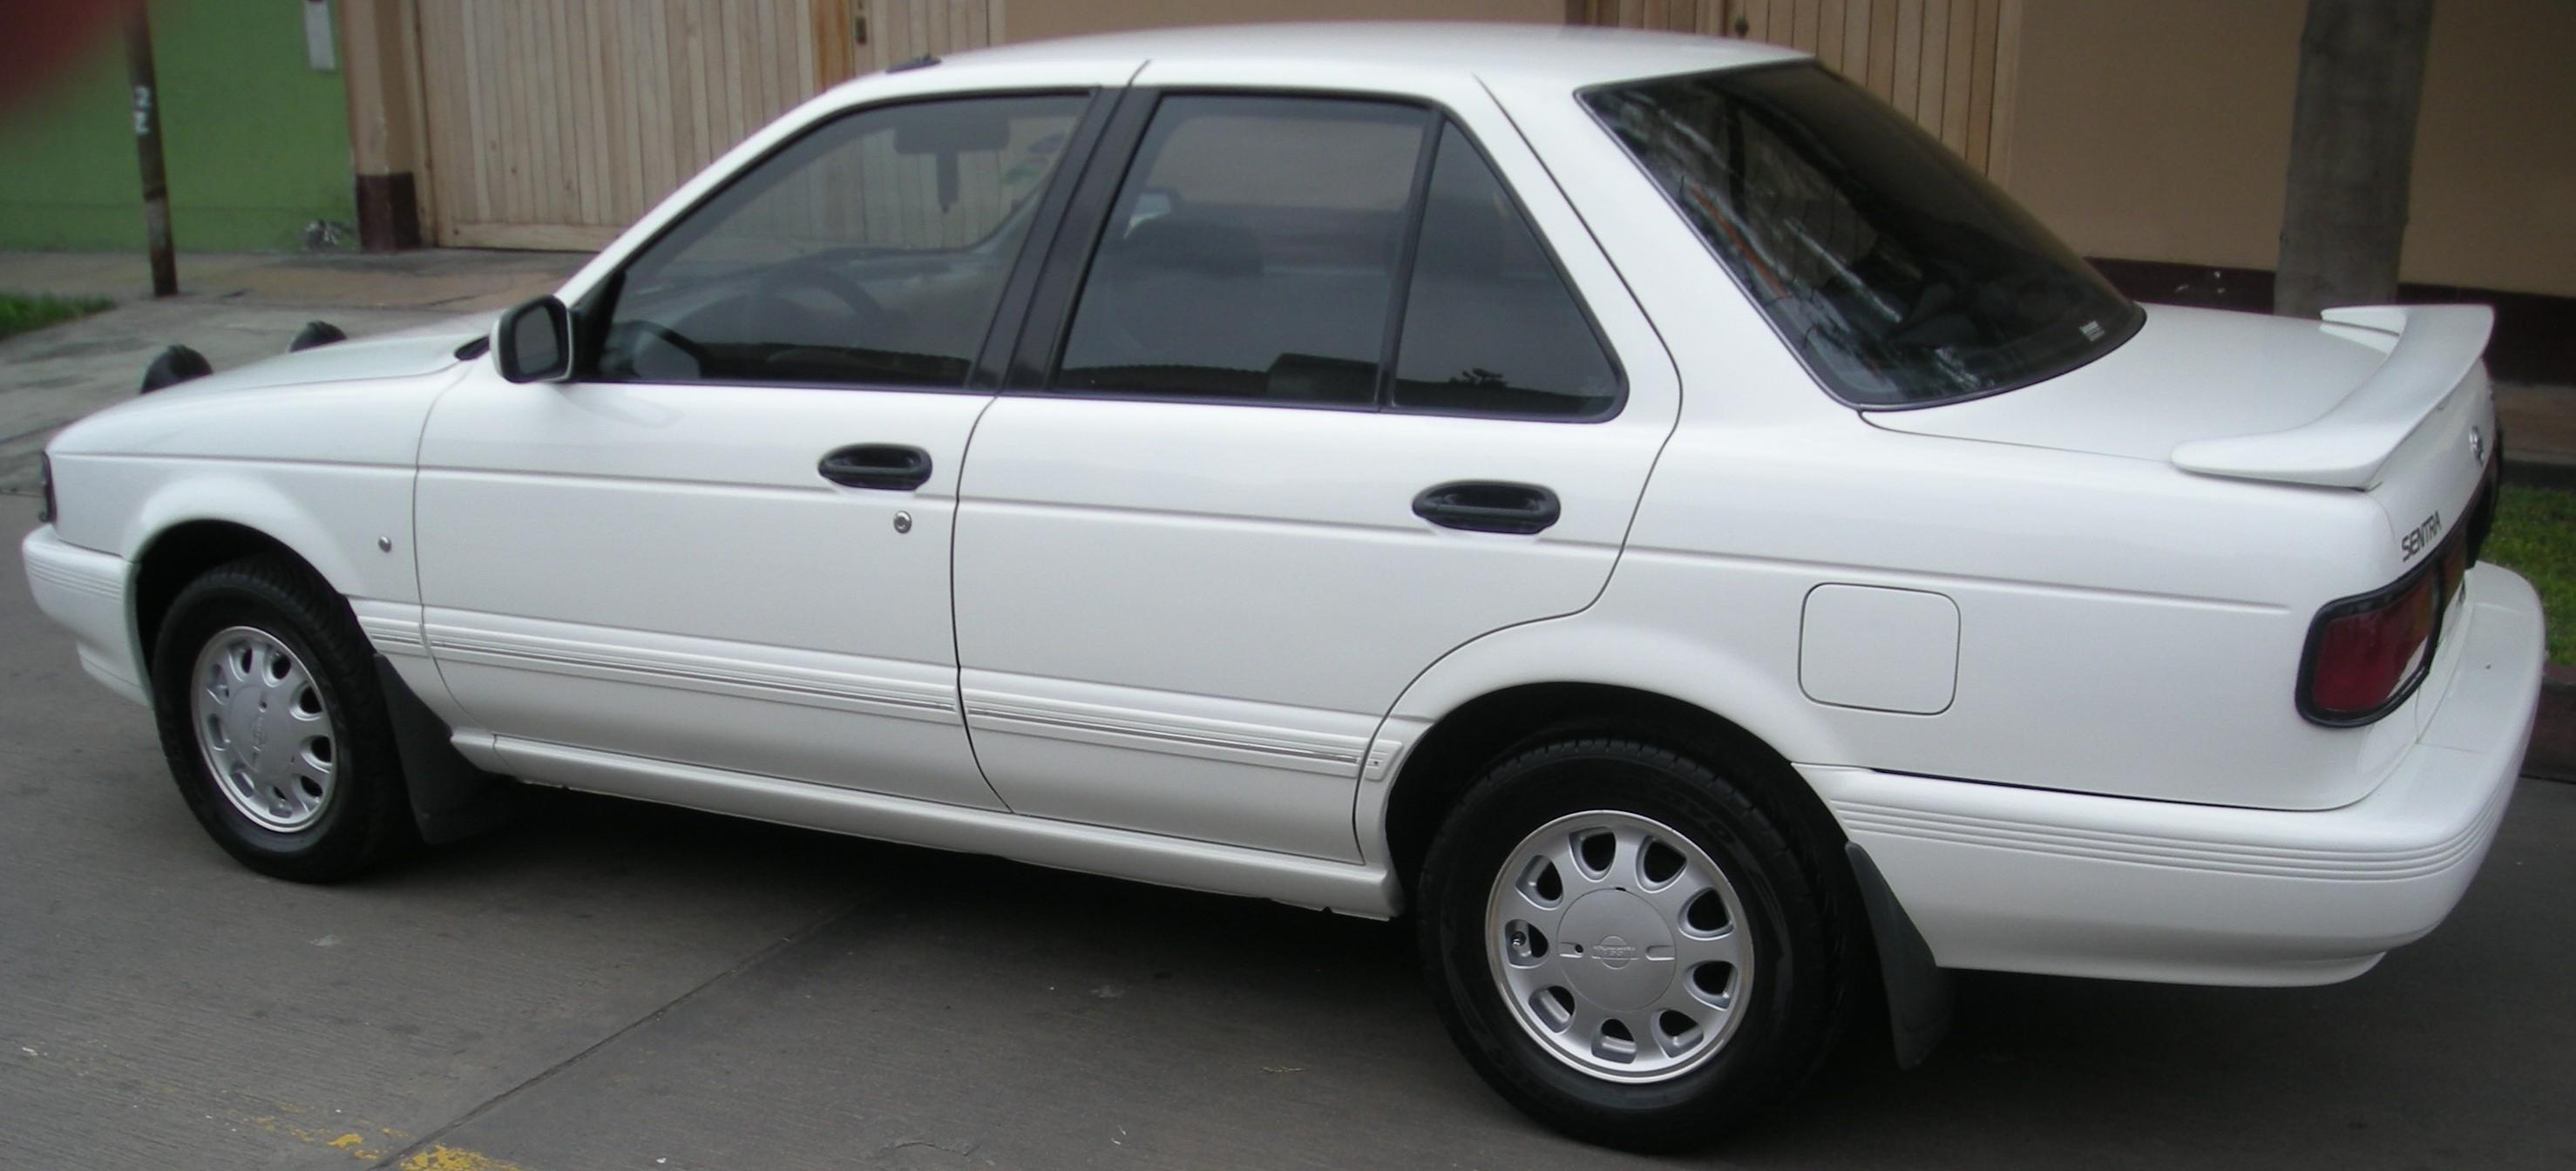 1994 Nissan Sentra Vin Check Specs Recalls Autodetective